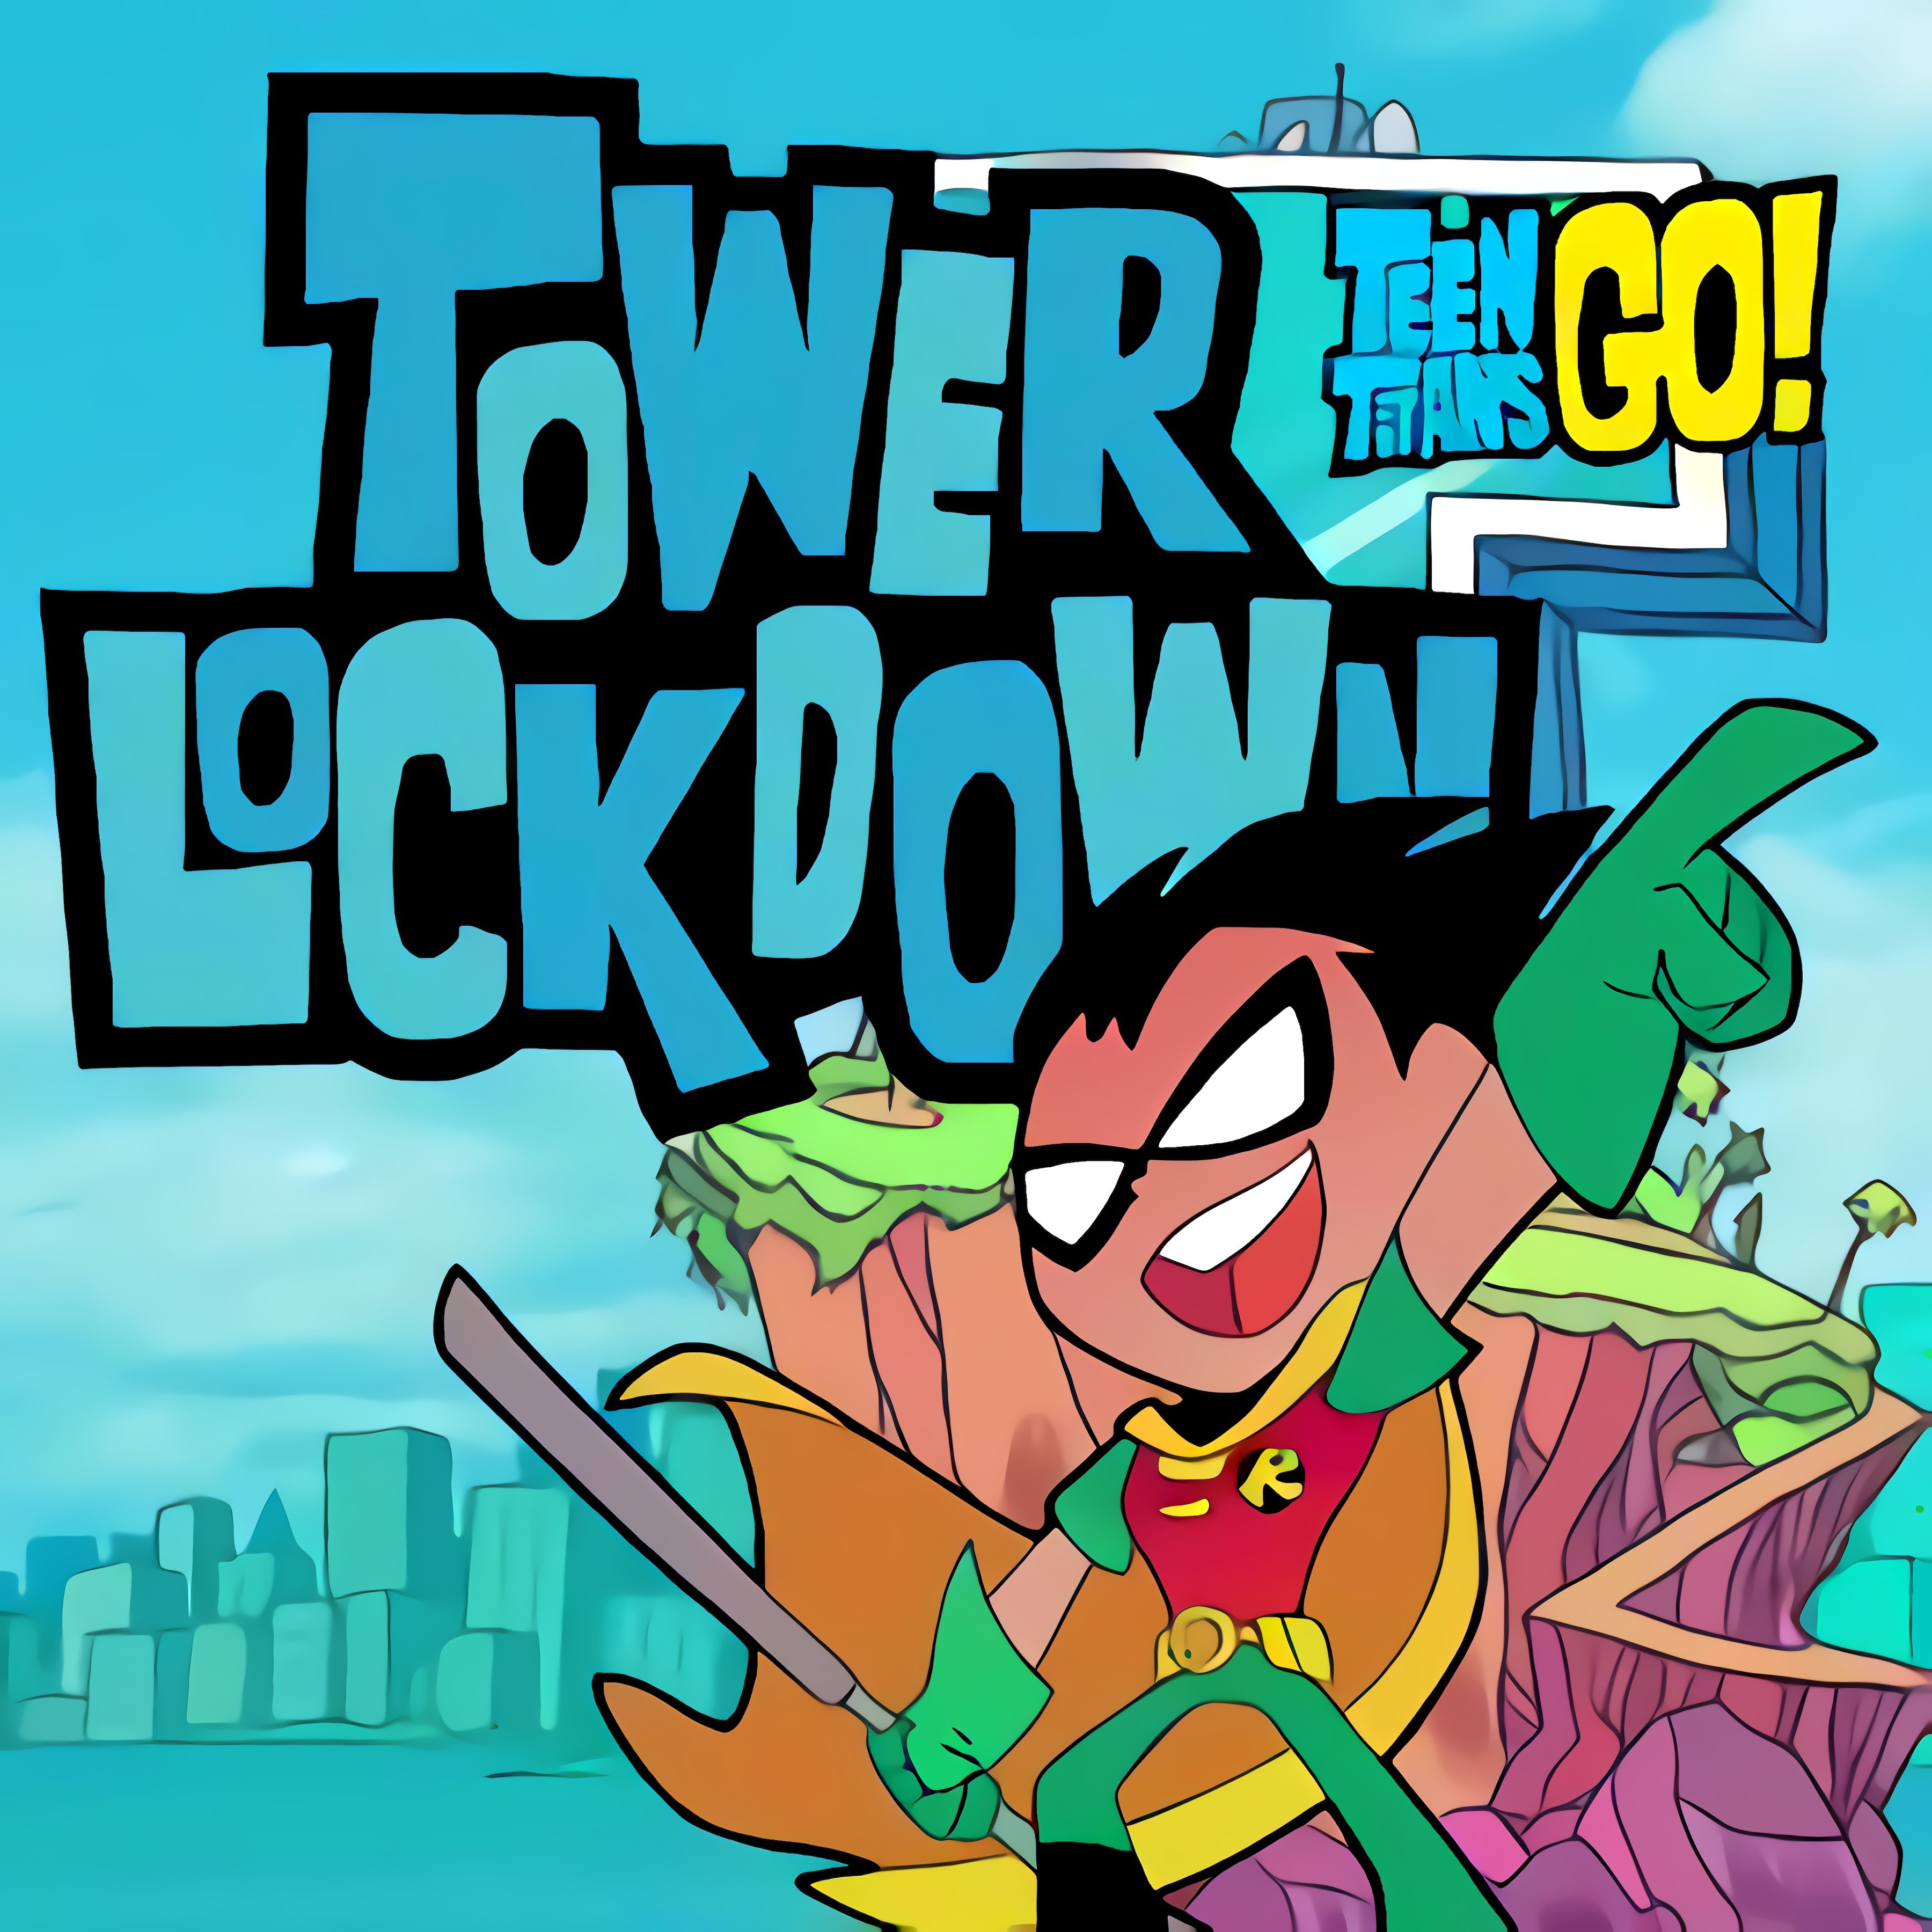 Tower Lockdown - Teen Titans Go!